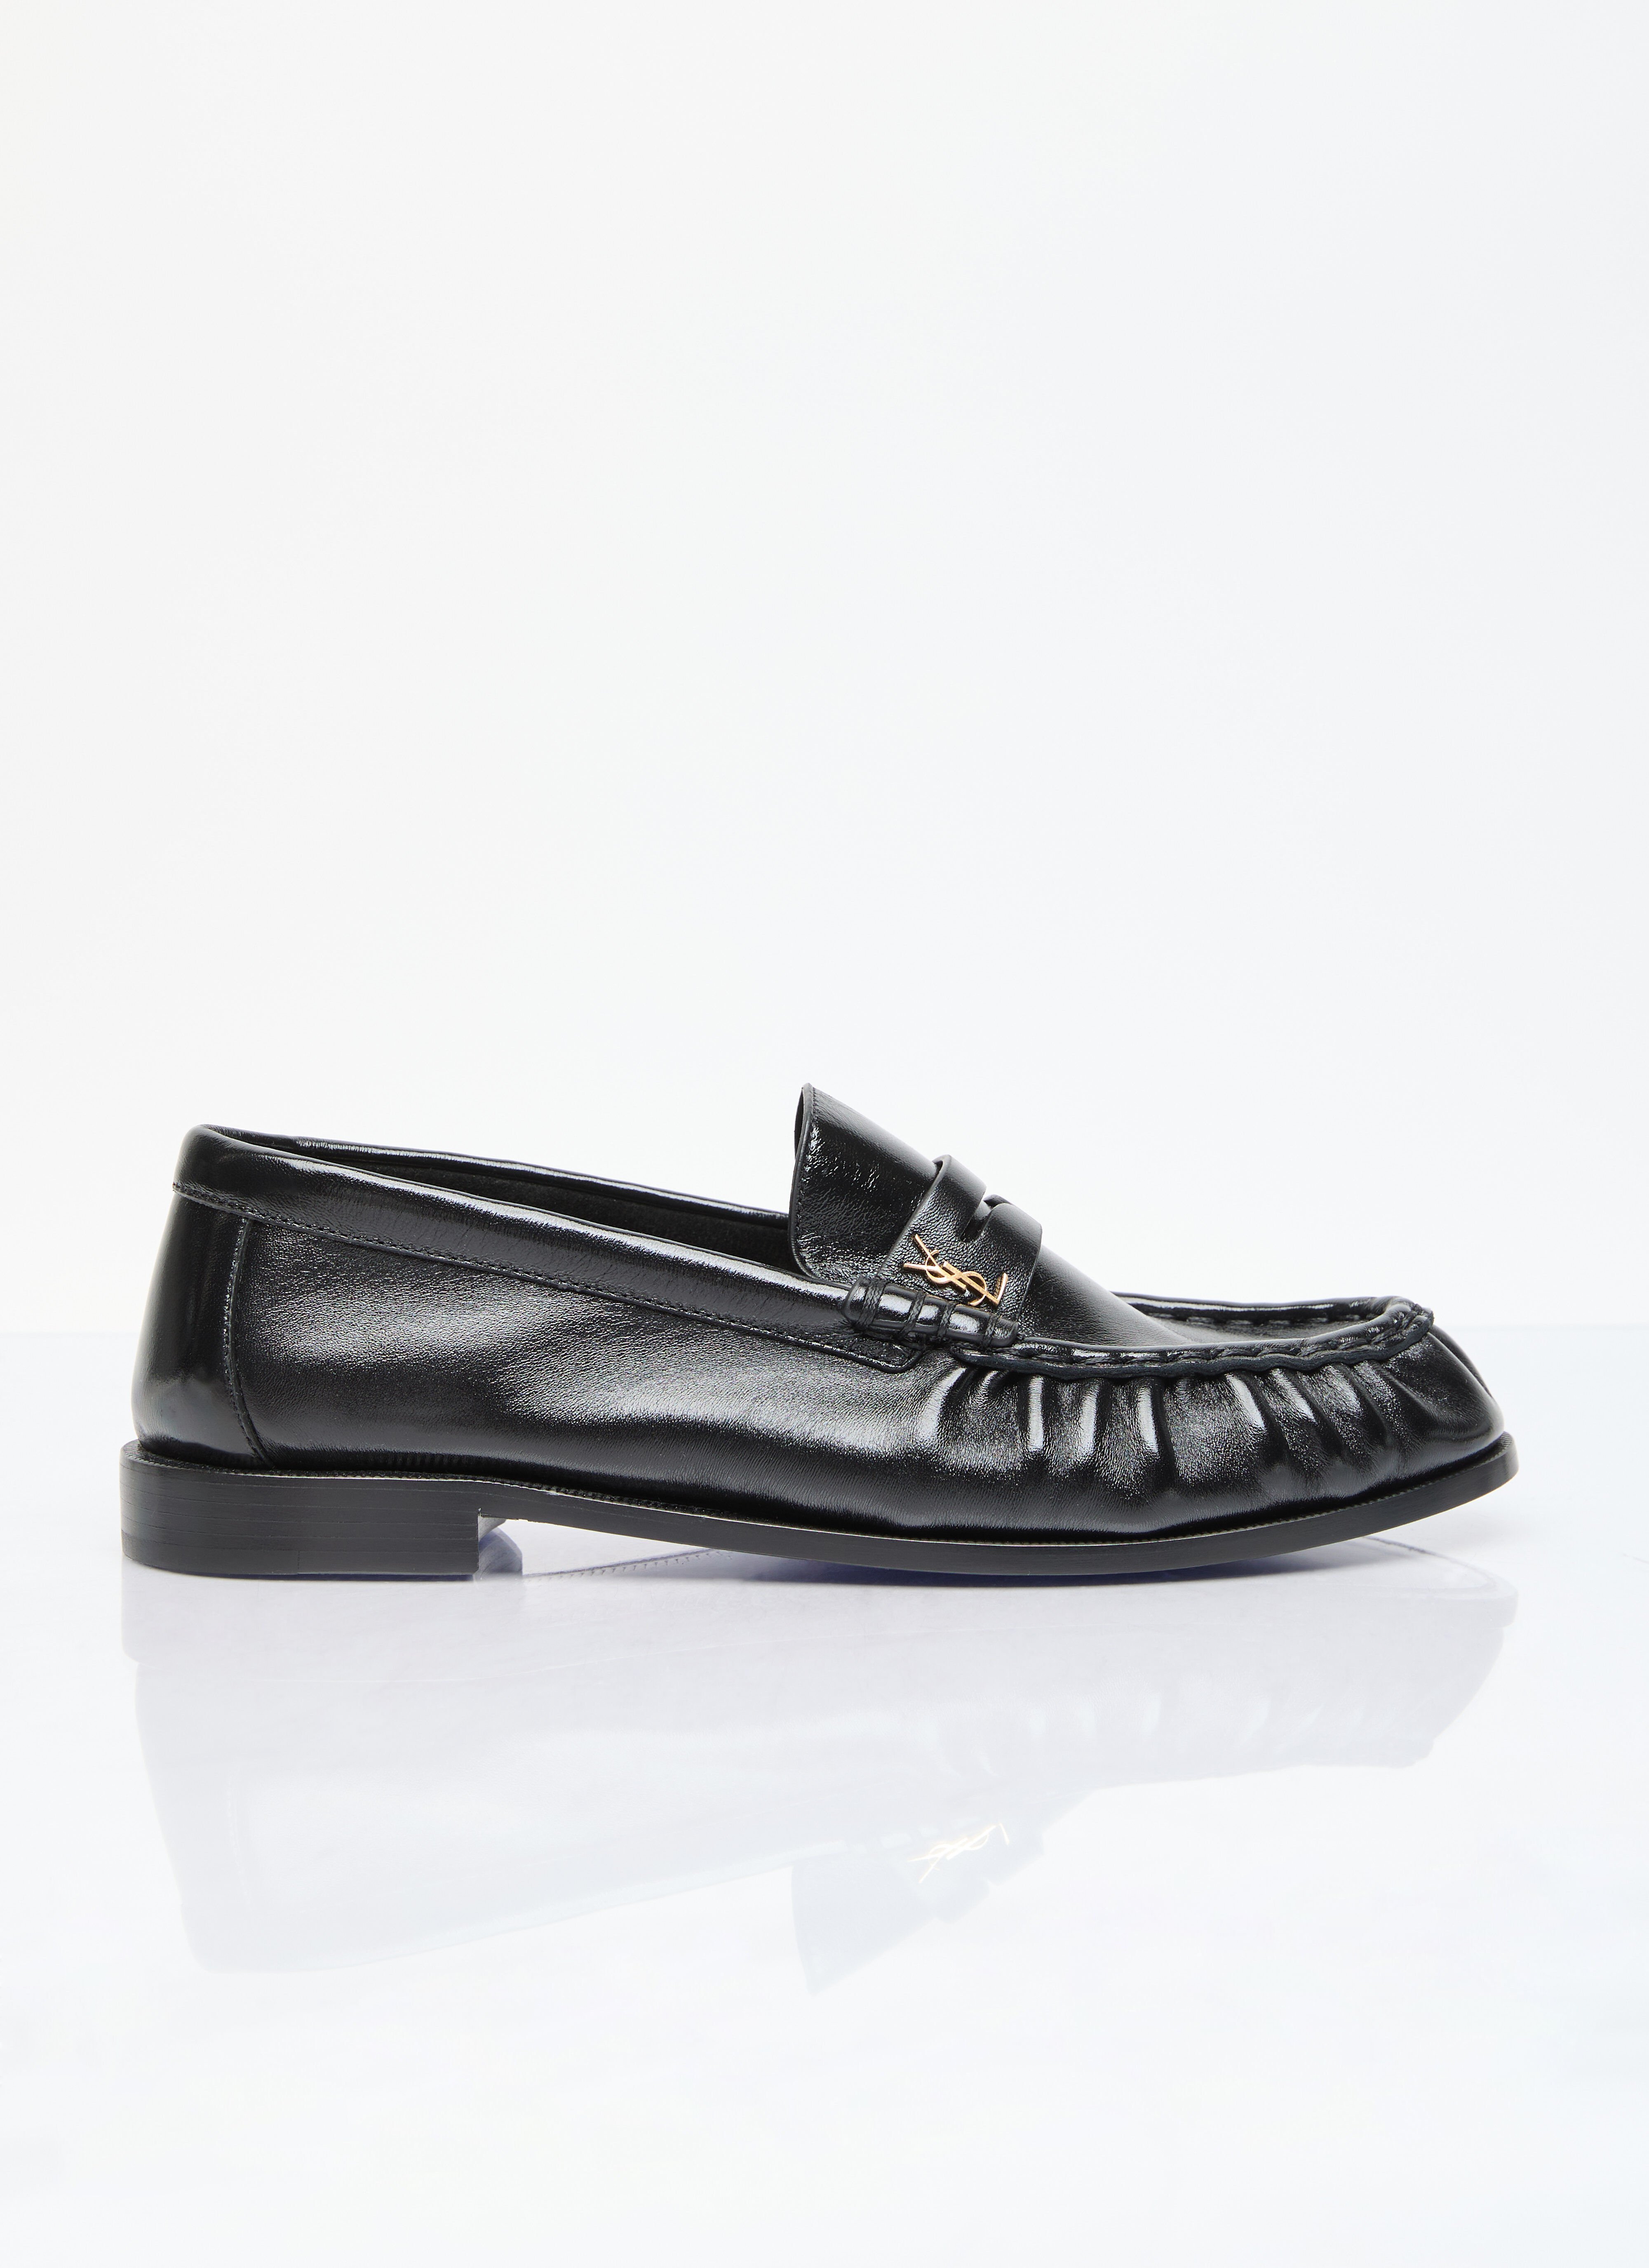 Thom Browne Le Loafer 便士皮拖鞋  Black thb0155012